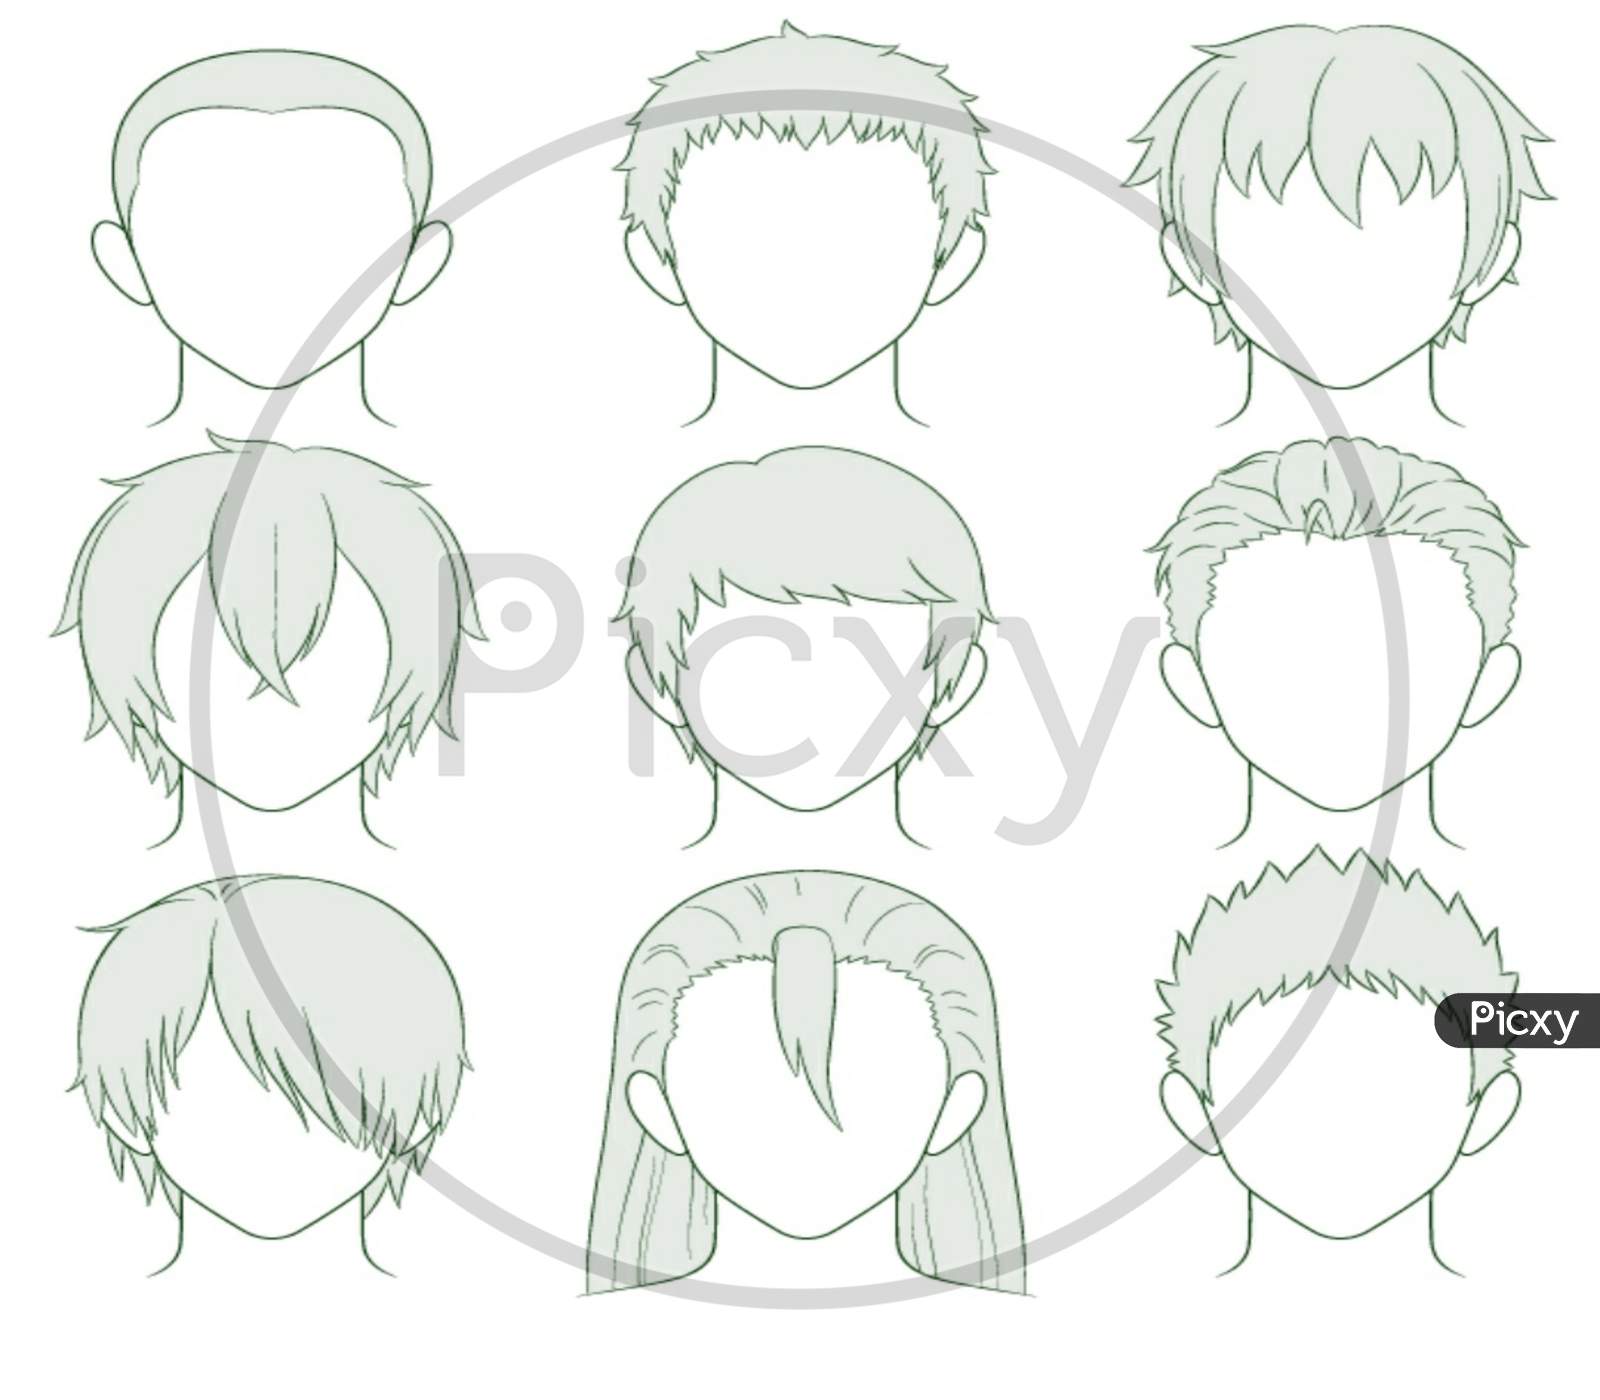 How to Draw Anime Boy Hair - DrawingNow